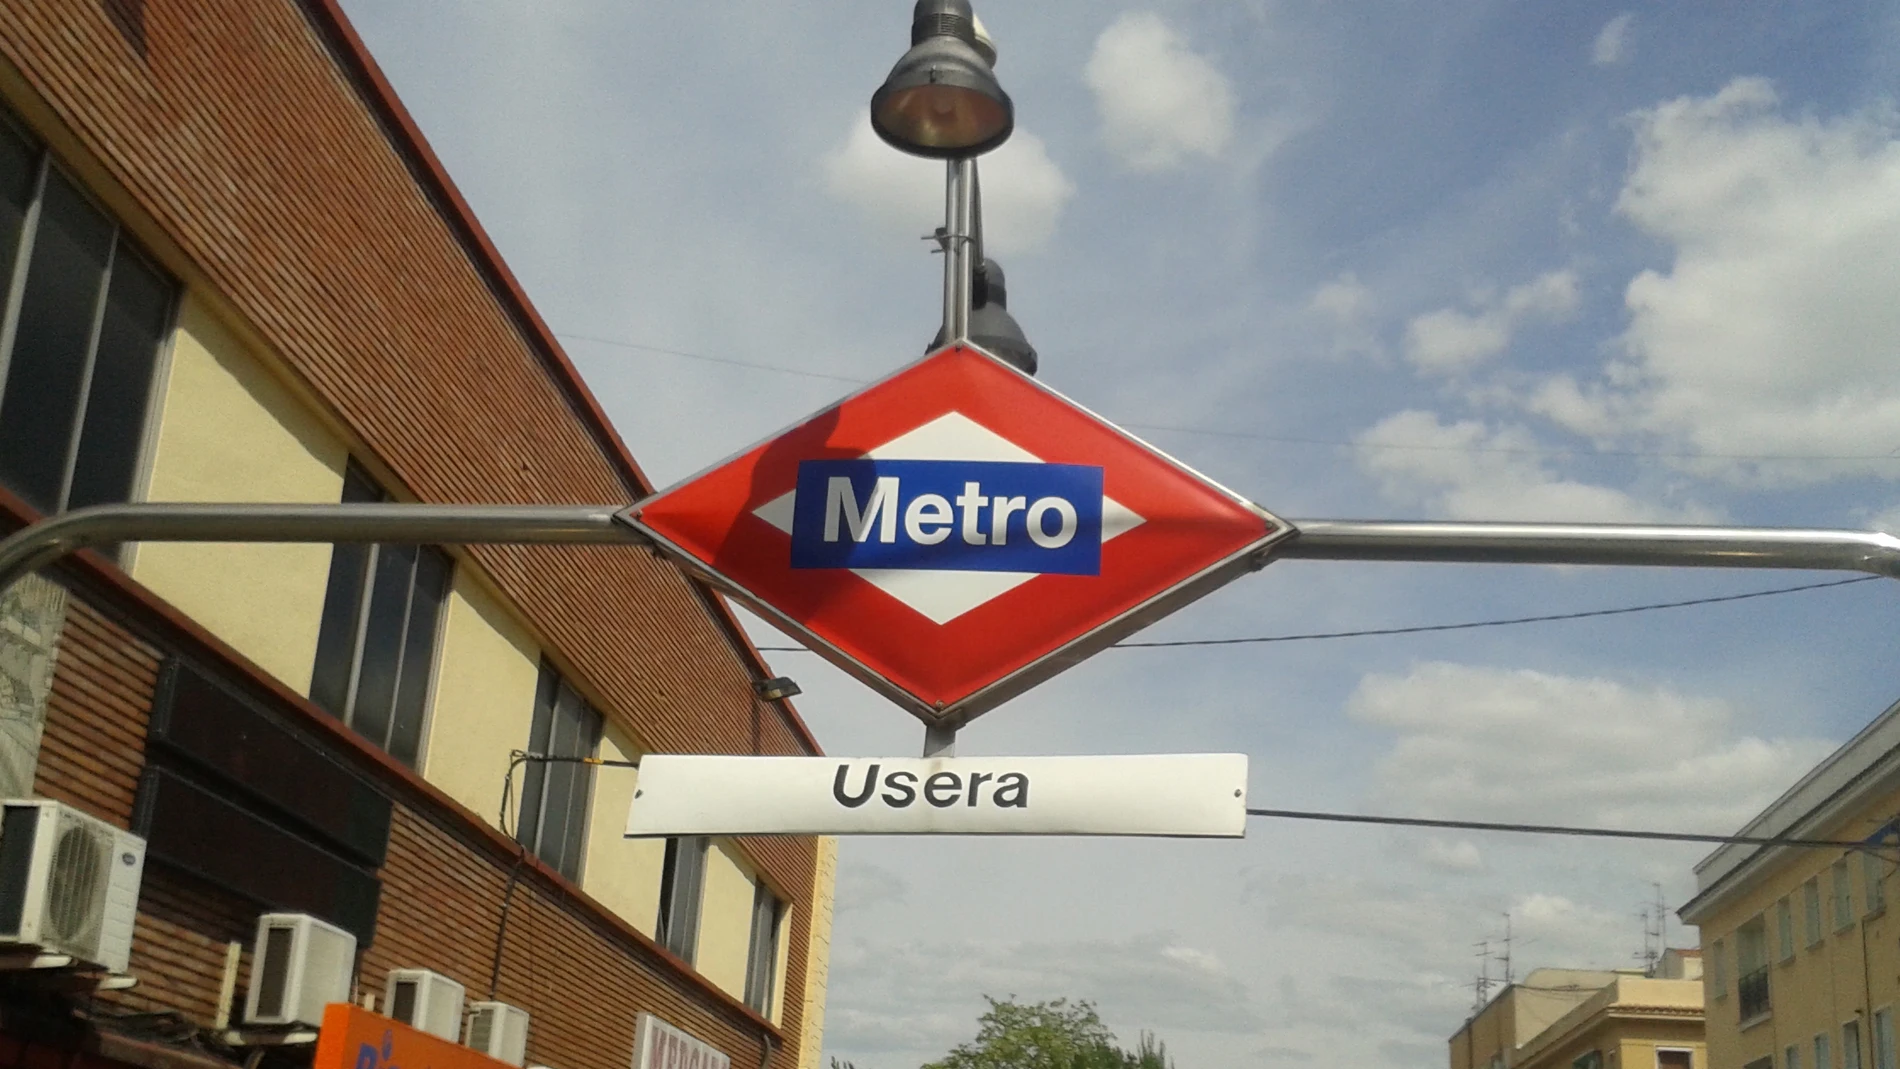 Parada de Metro de Usera